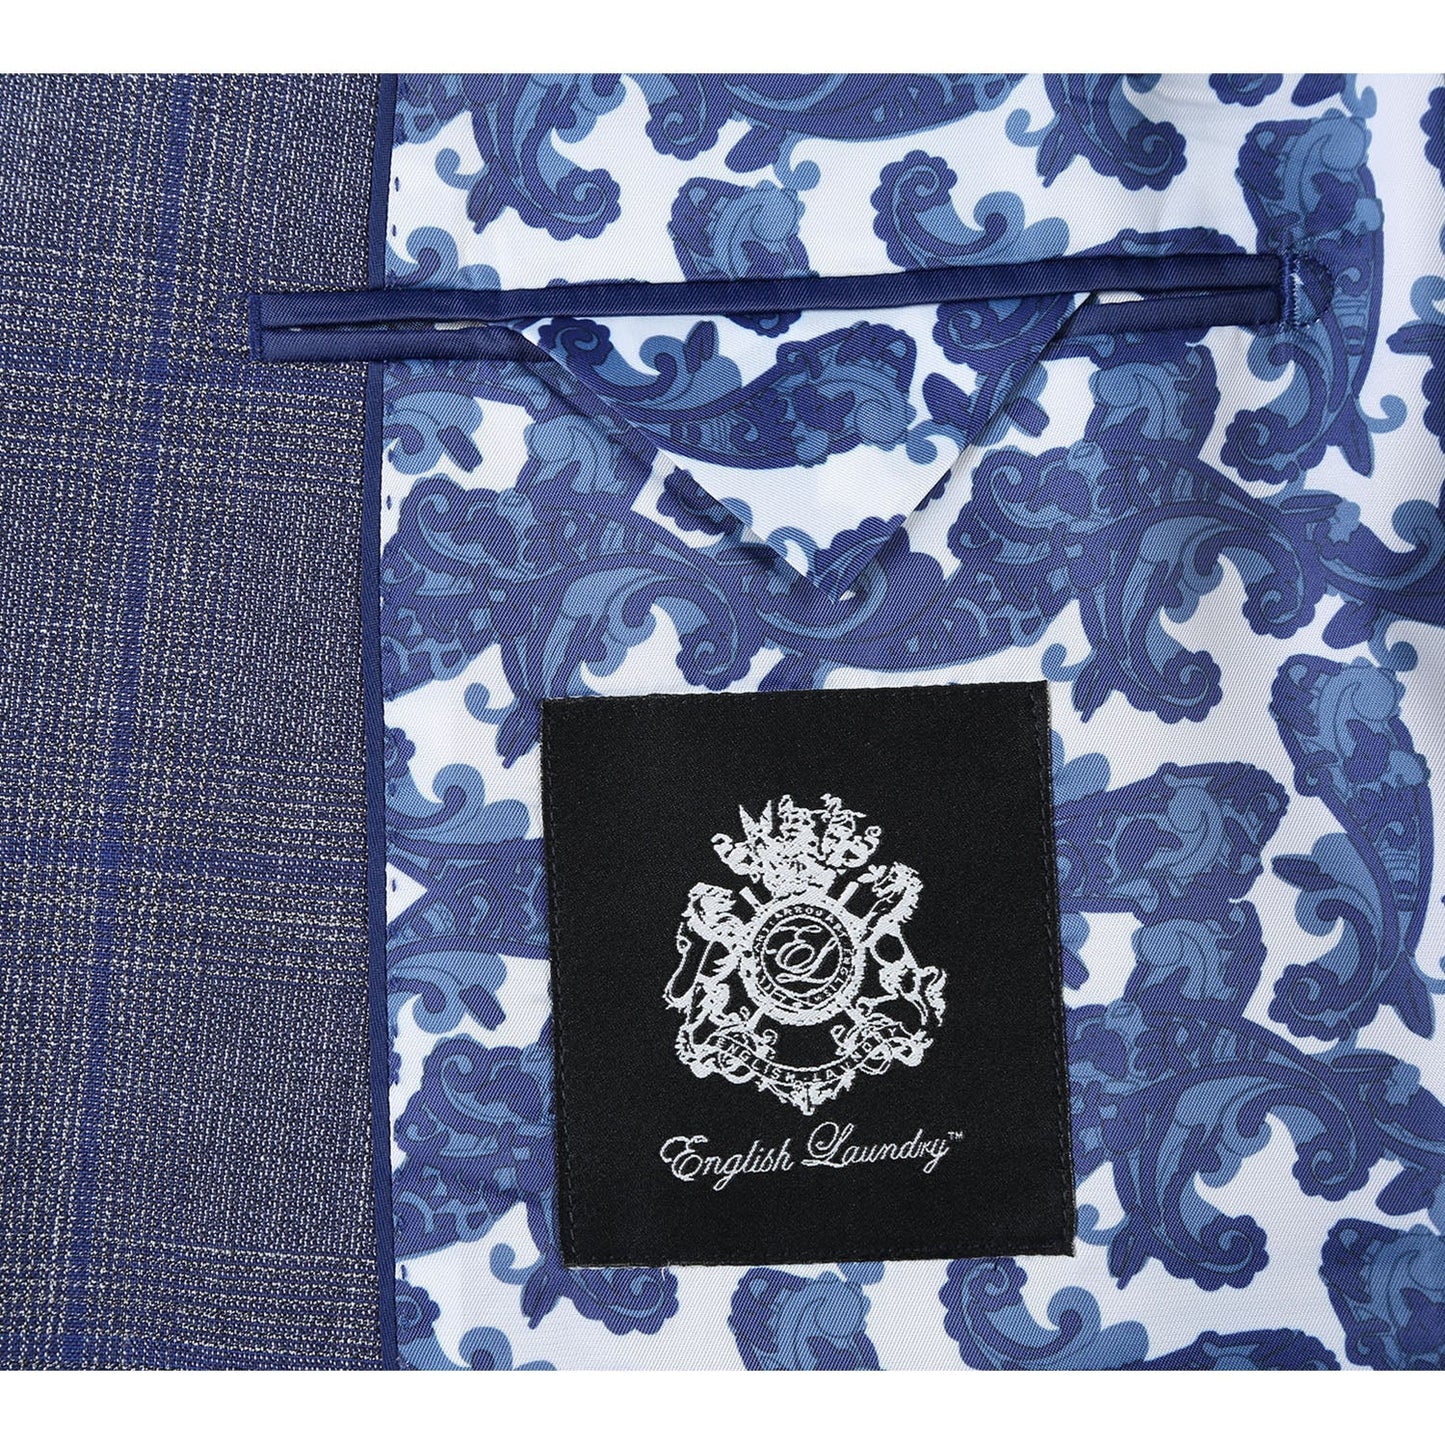 EL72-52-400 Slim Fit English Laundry Gray with Blue Windowpane Peak Lapel Wool Blend Suit